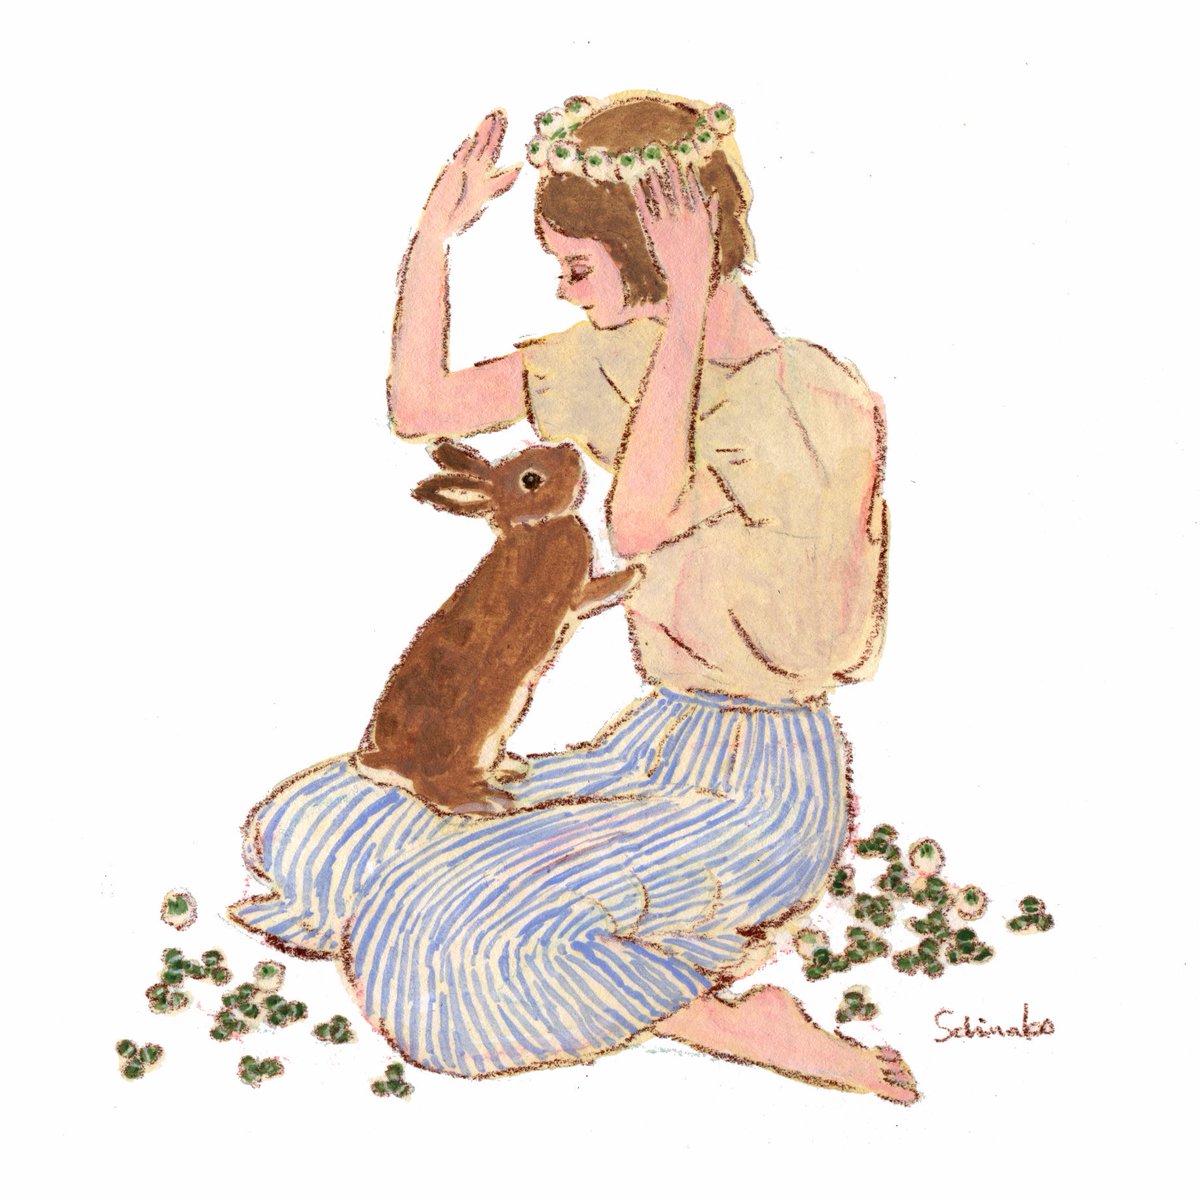 Schinako Moriyama Illustrator A Twitter シロツメクサの花かんむり うさぎ イラスト